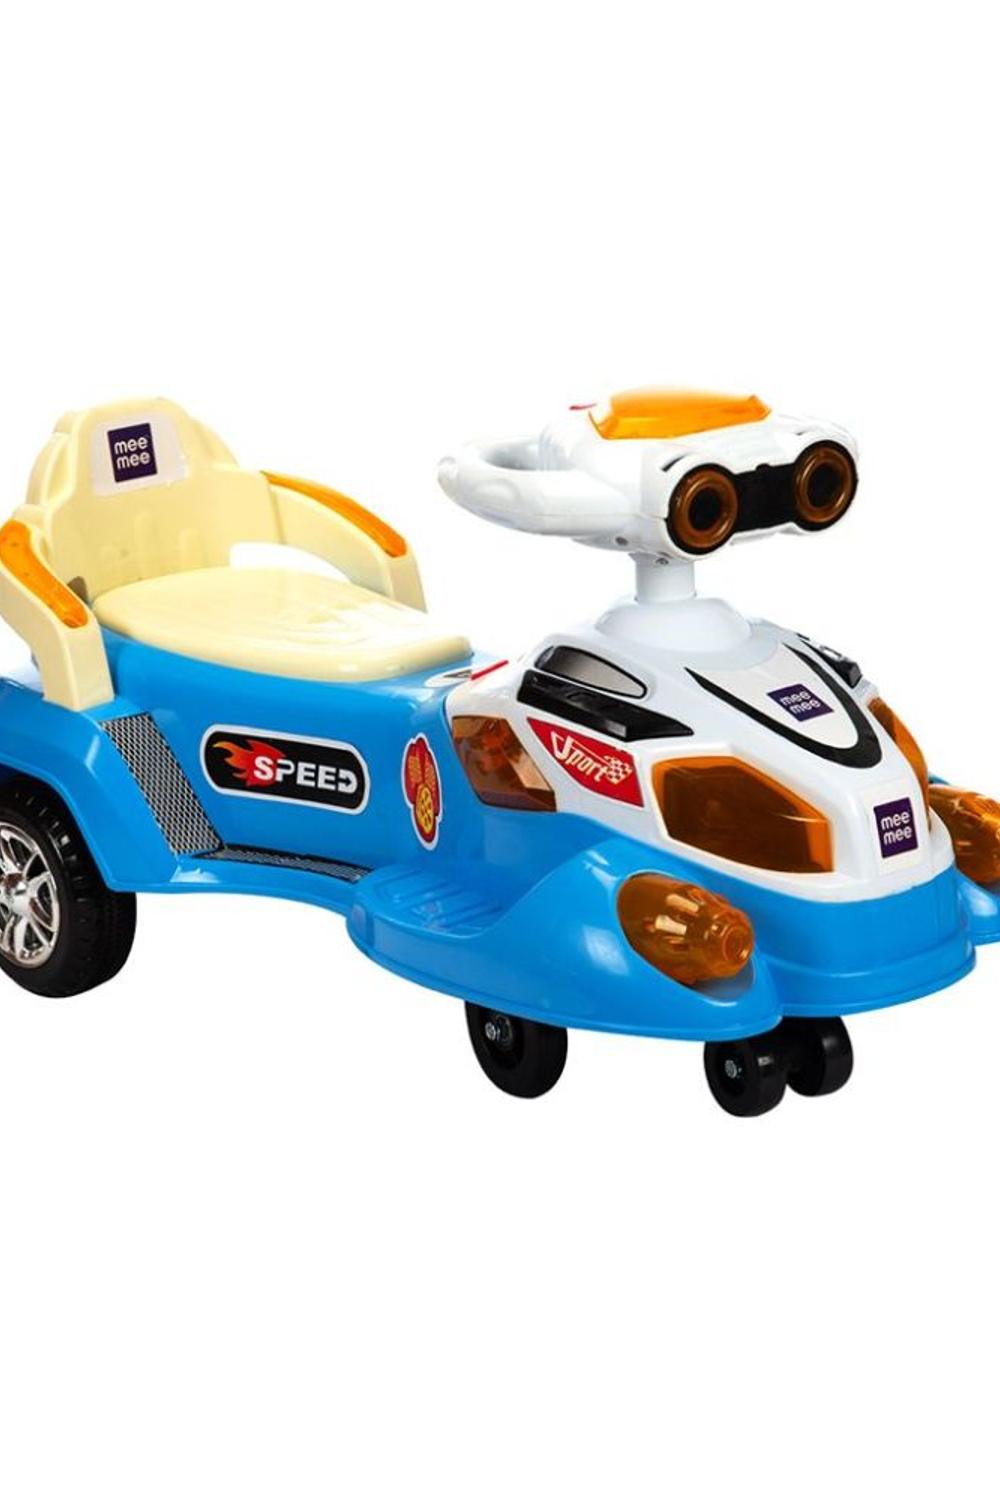 Mee Mee Baby Fun Racing Twister Scooter (Blue)